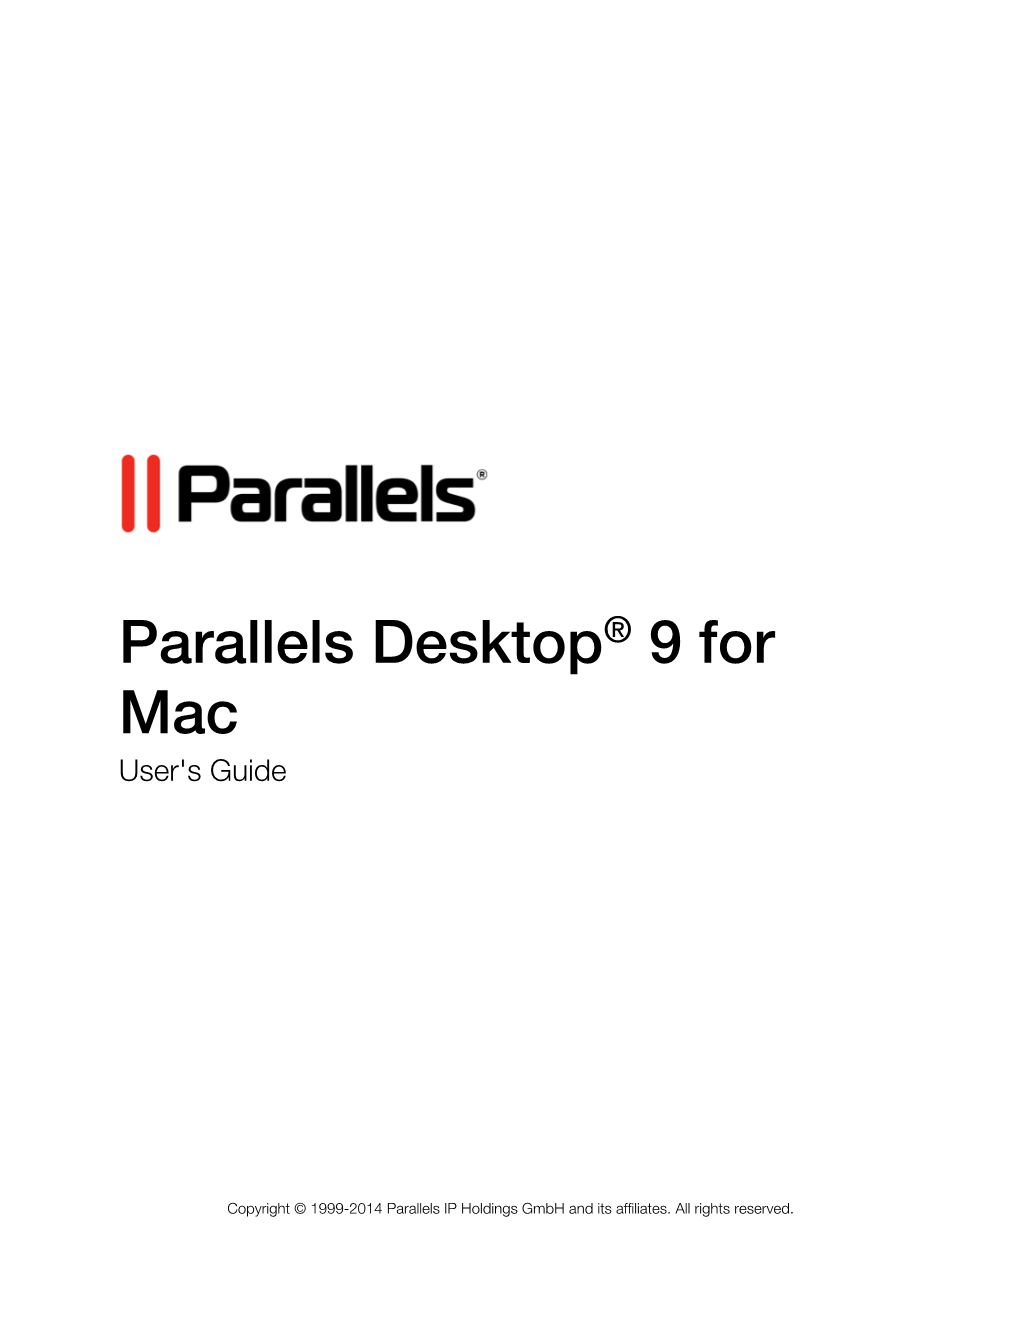 Parallels Desktop® 9 for Mac User's Guide